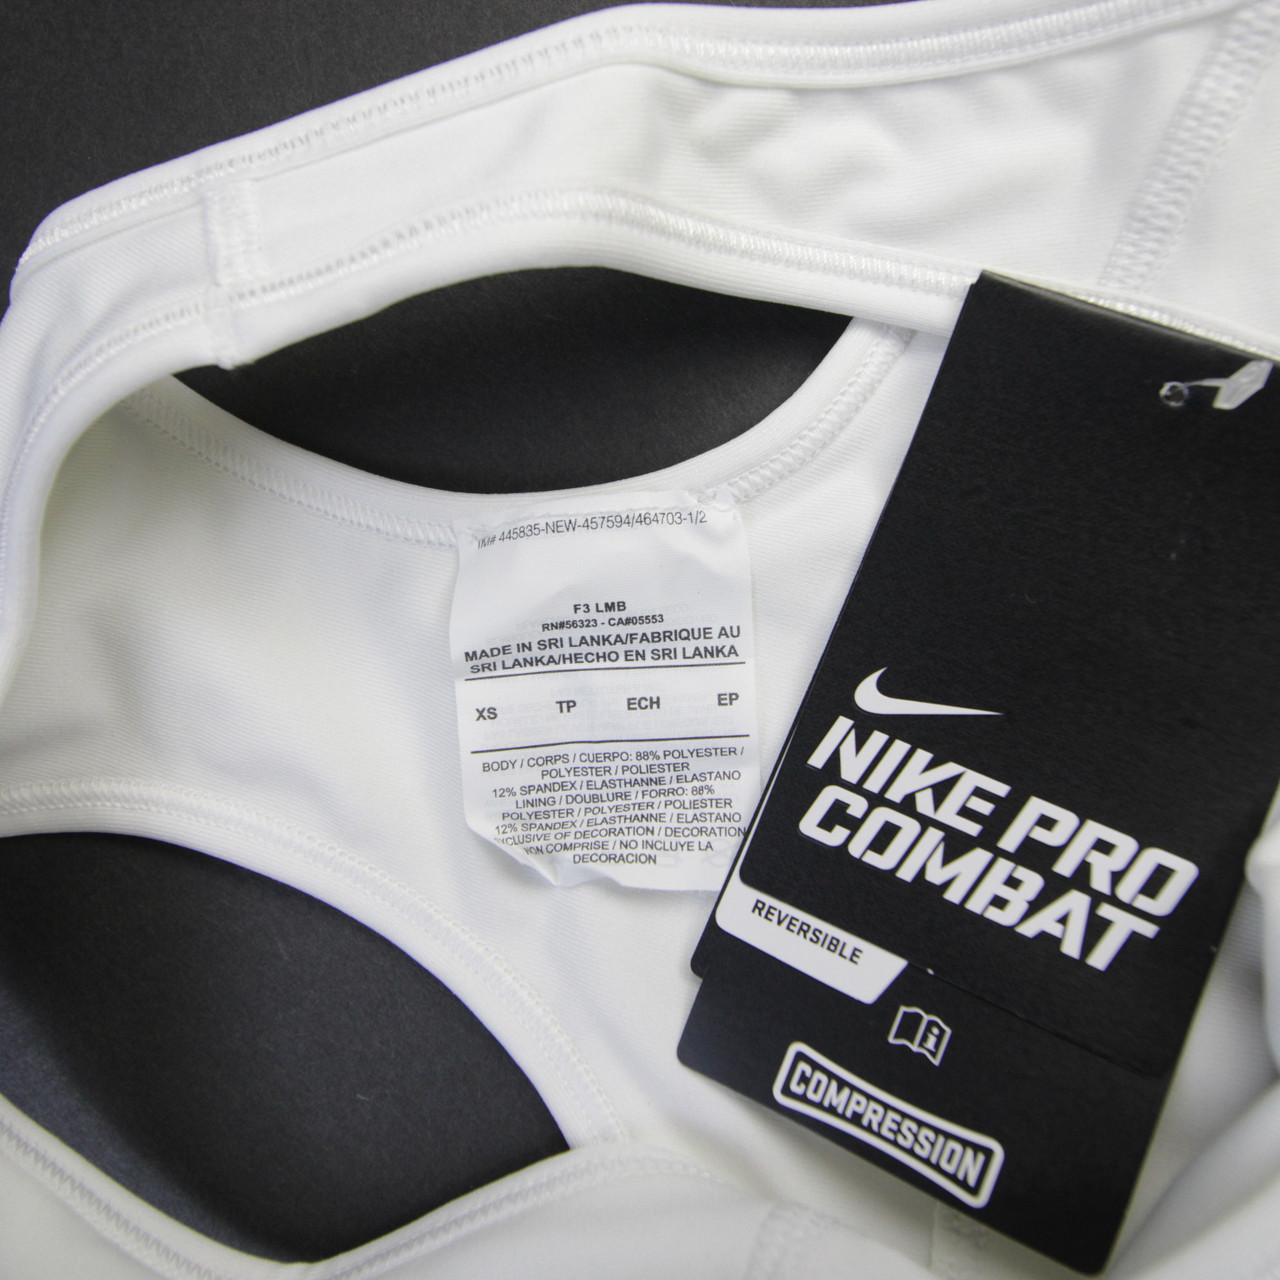 Black Sports Bras. Nike CA